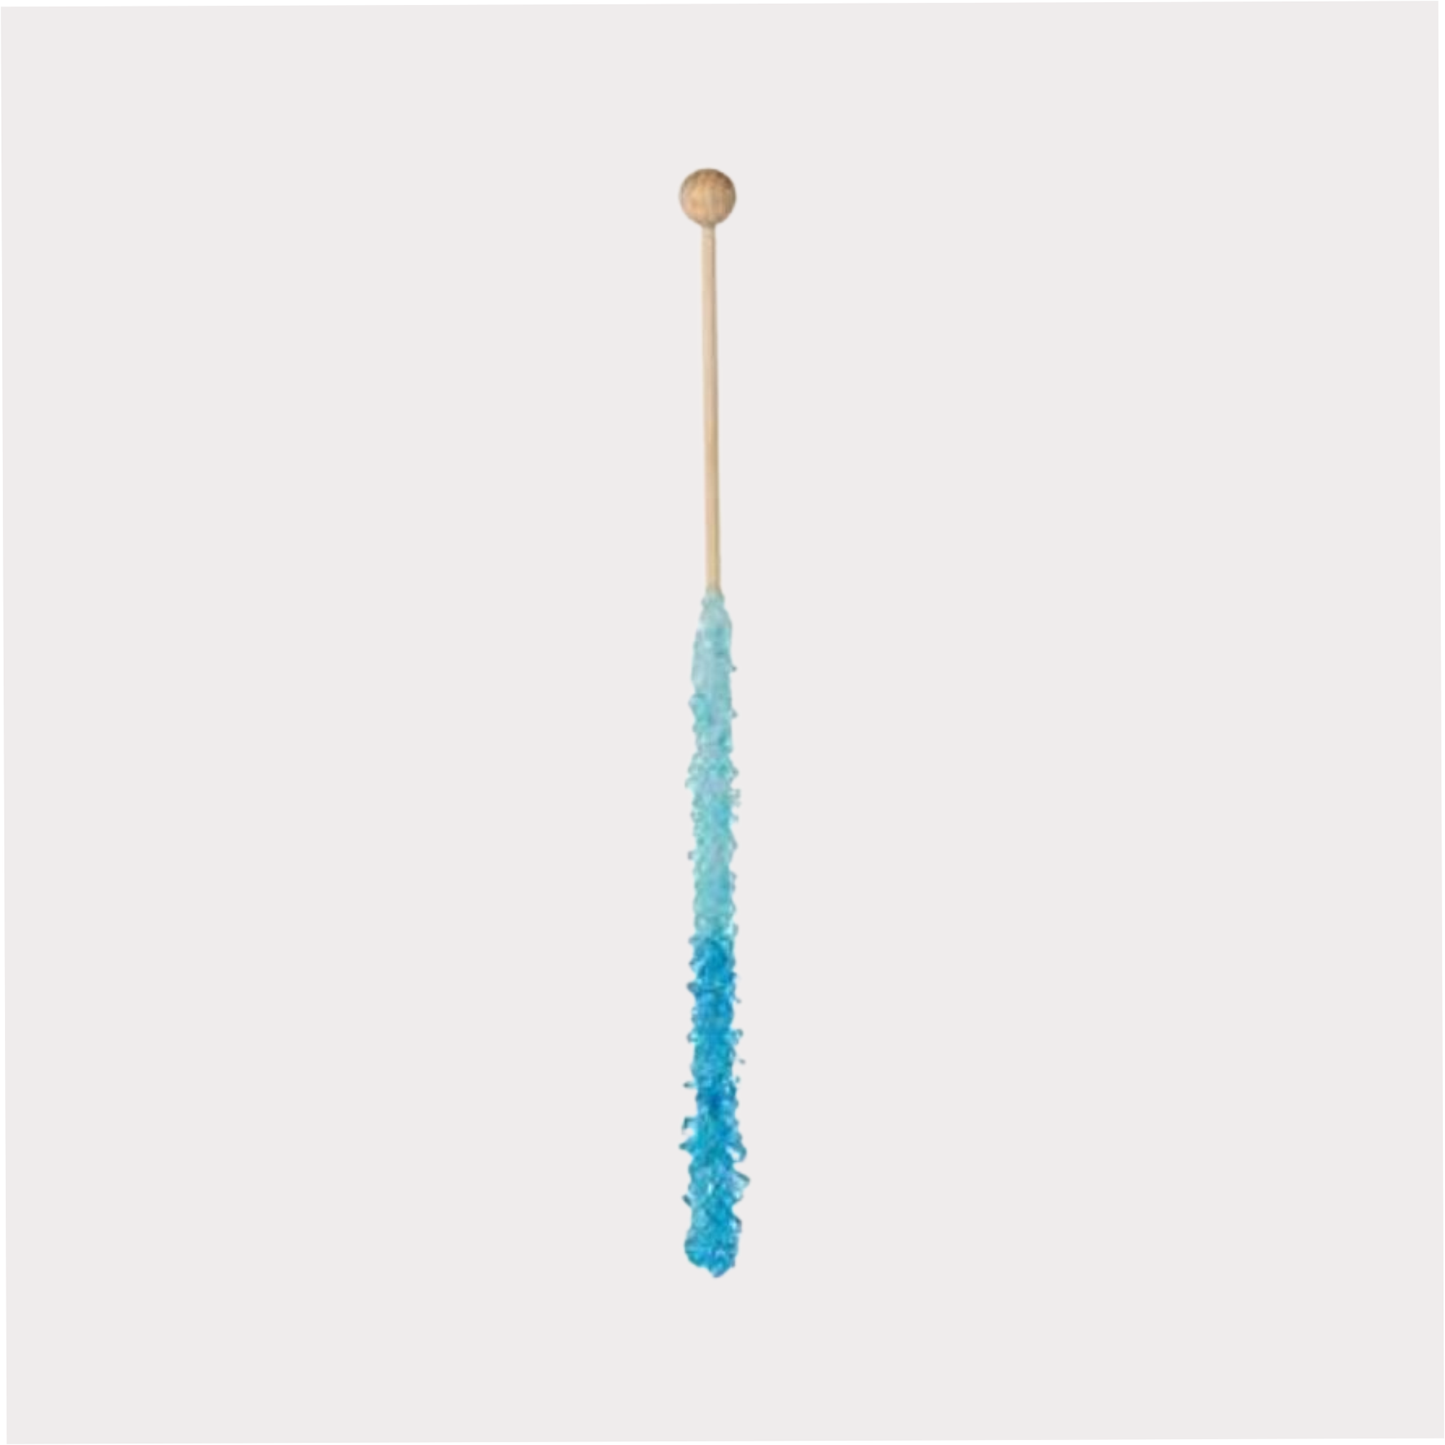 Cocktail Sticks "Duo", 2-farbig blau-hellblau